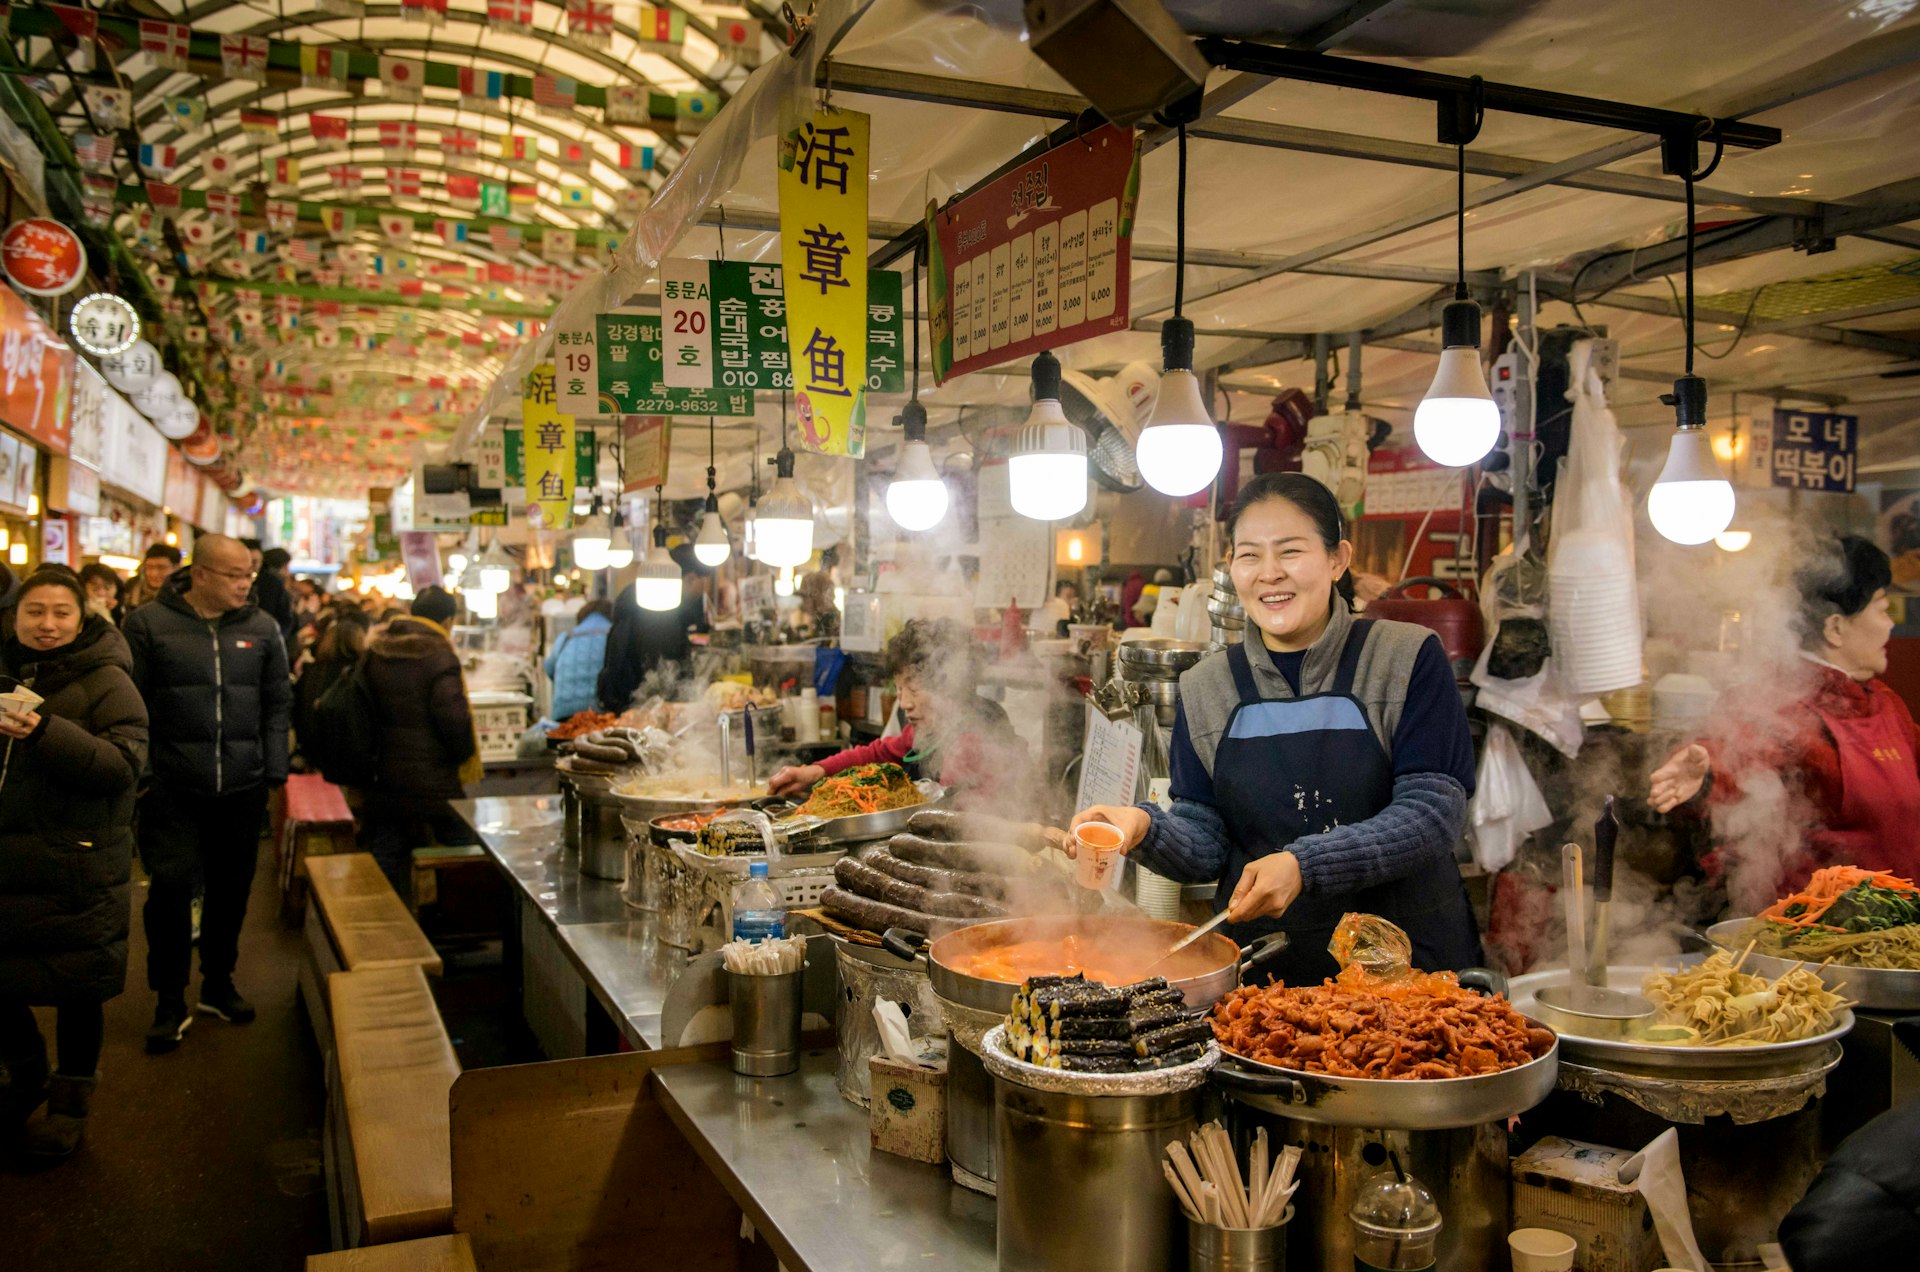 A vendor prepares food at a market in Seoul, South Korea